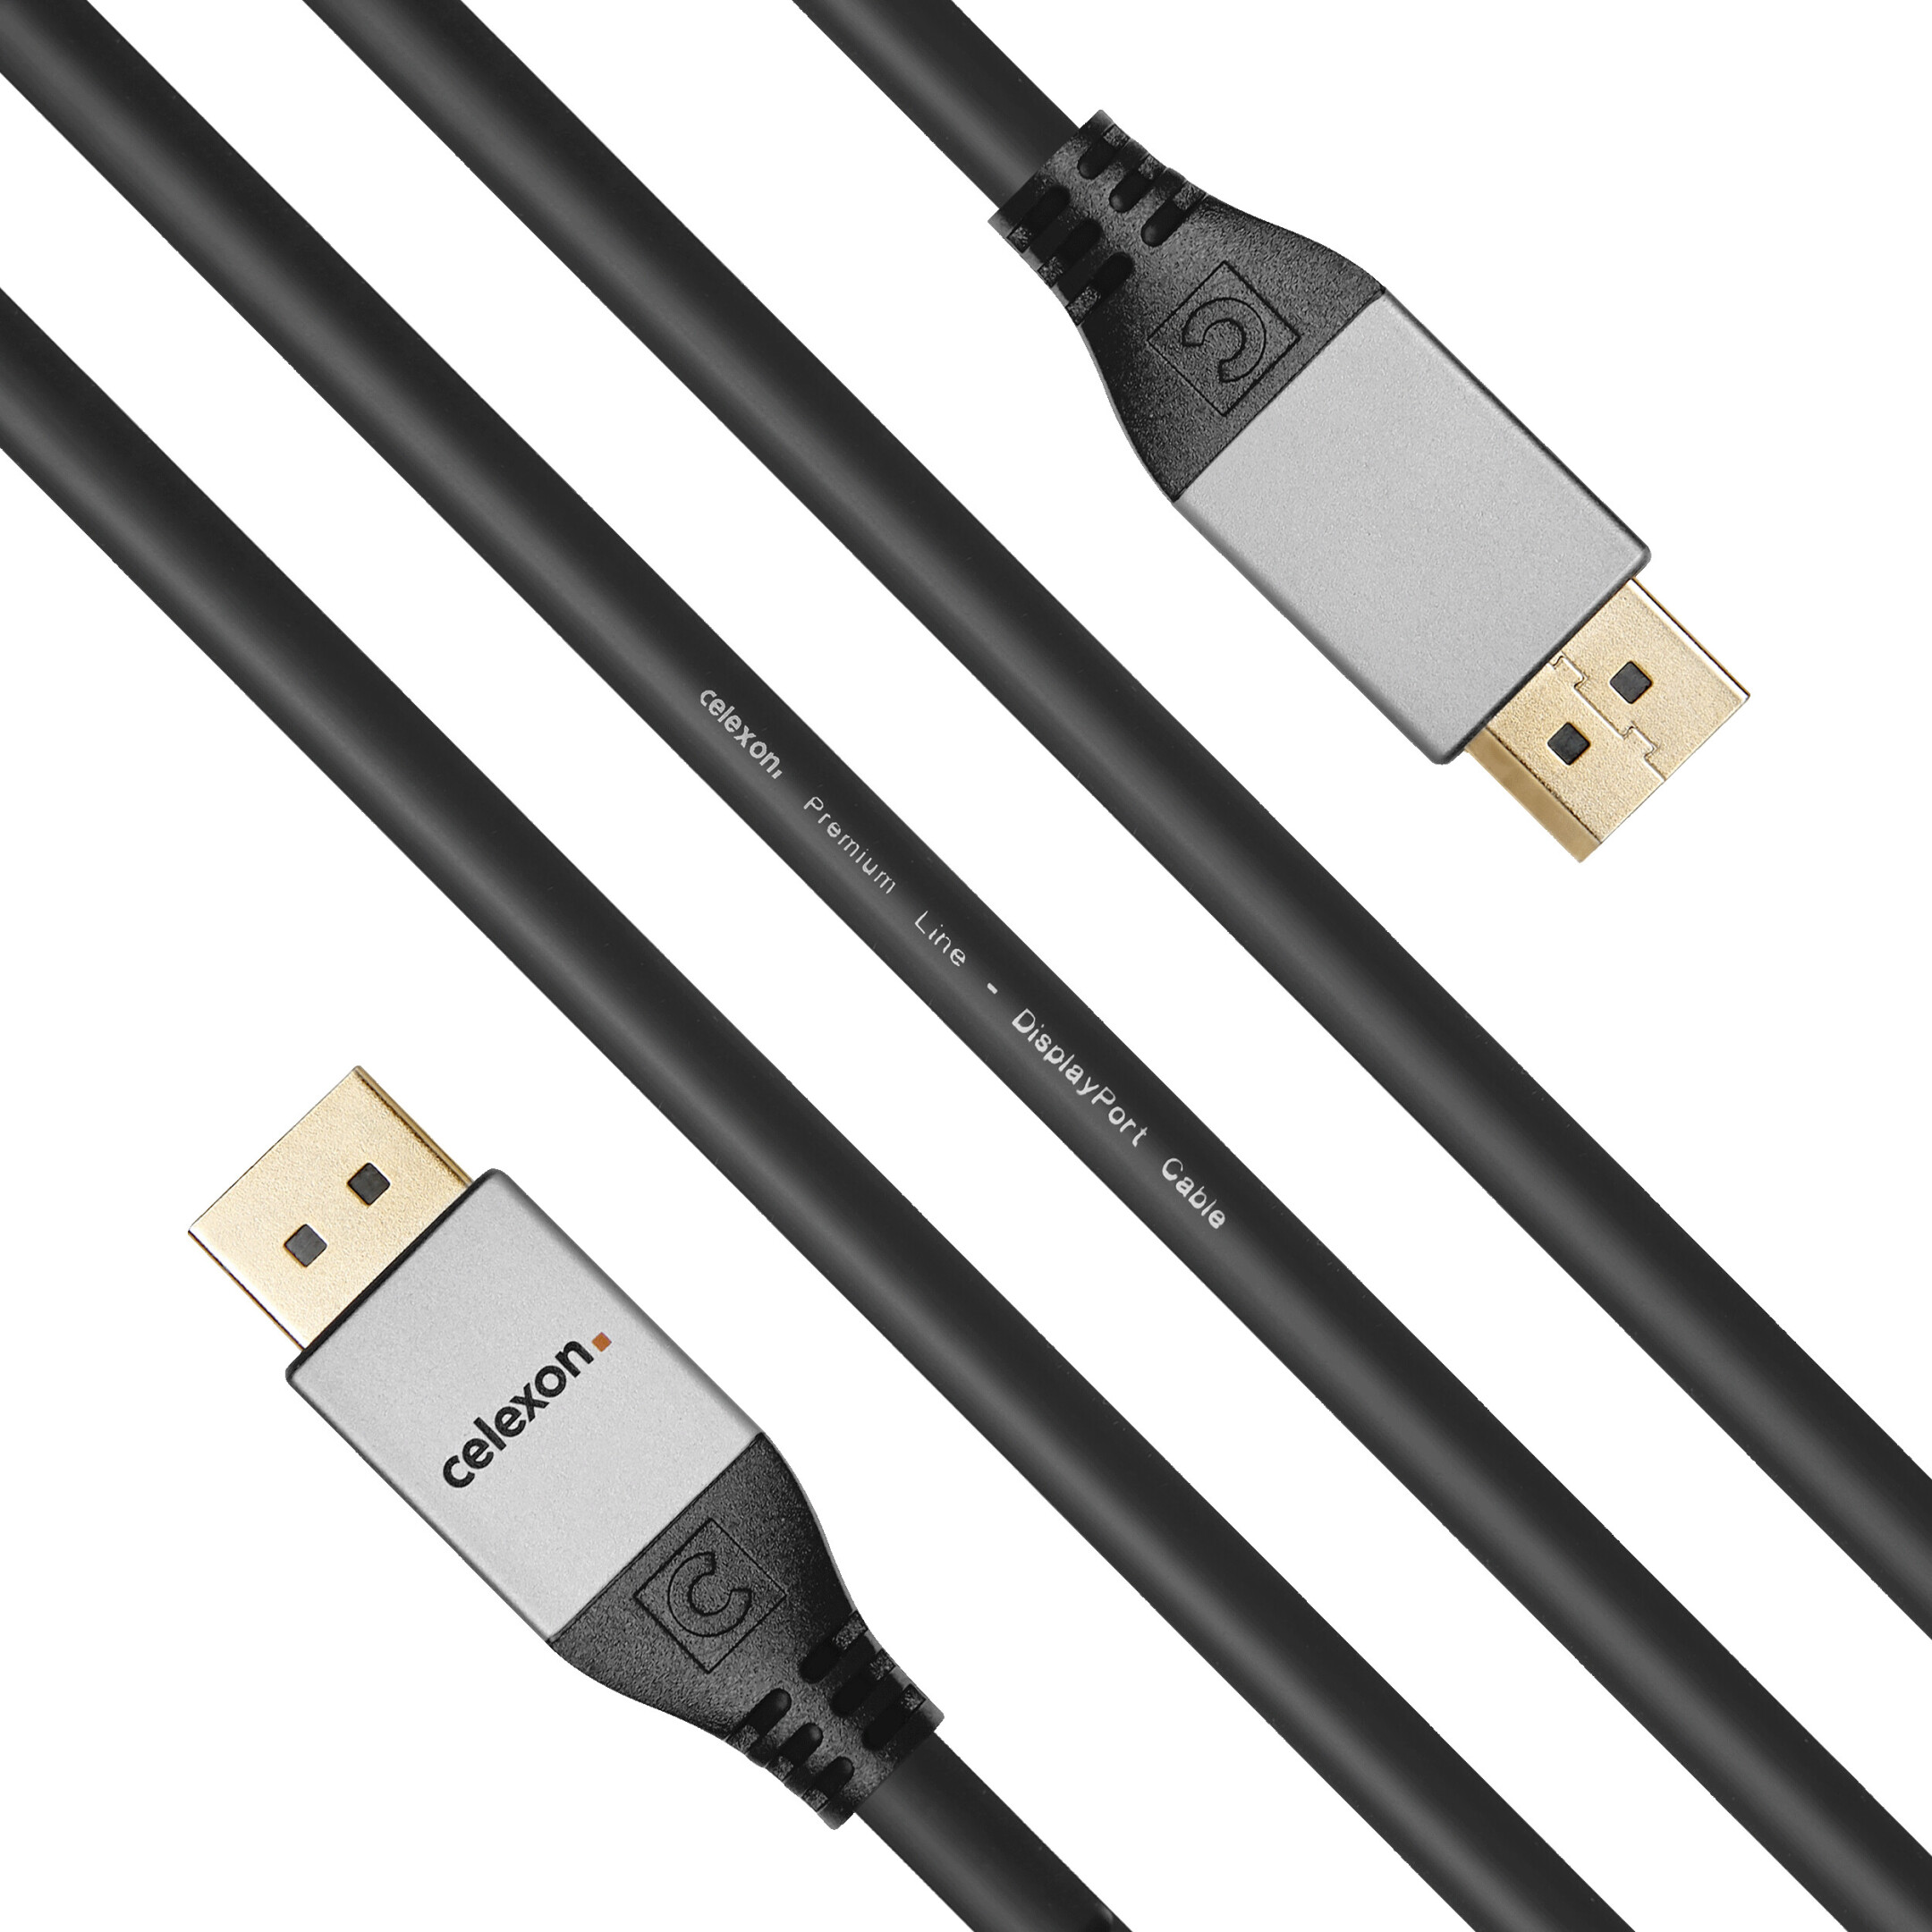 celexon-DisplayPort-kabel-4K-3-0m-Professional